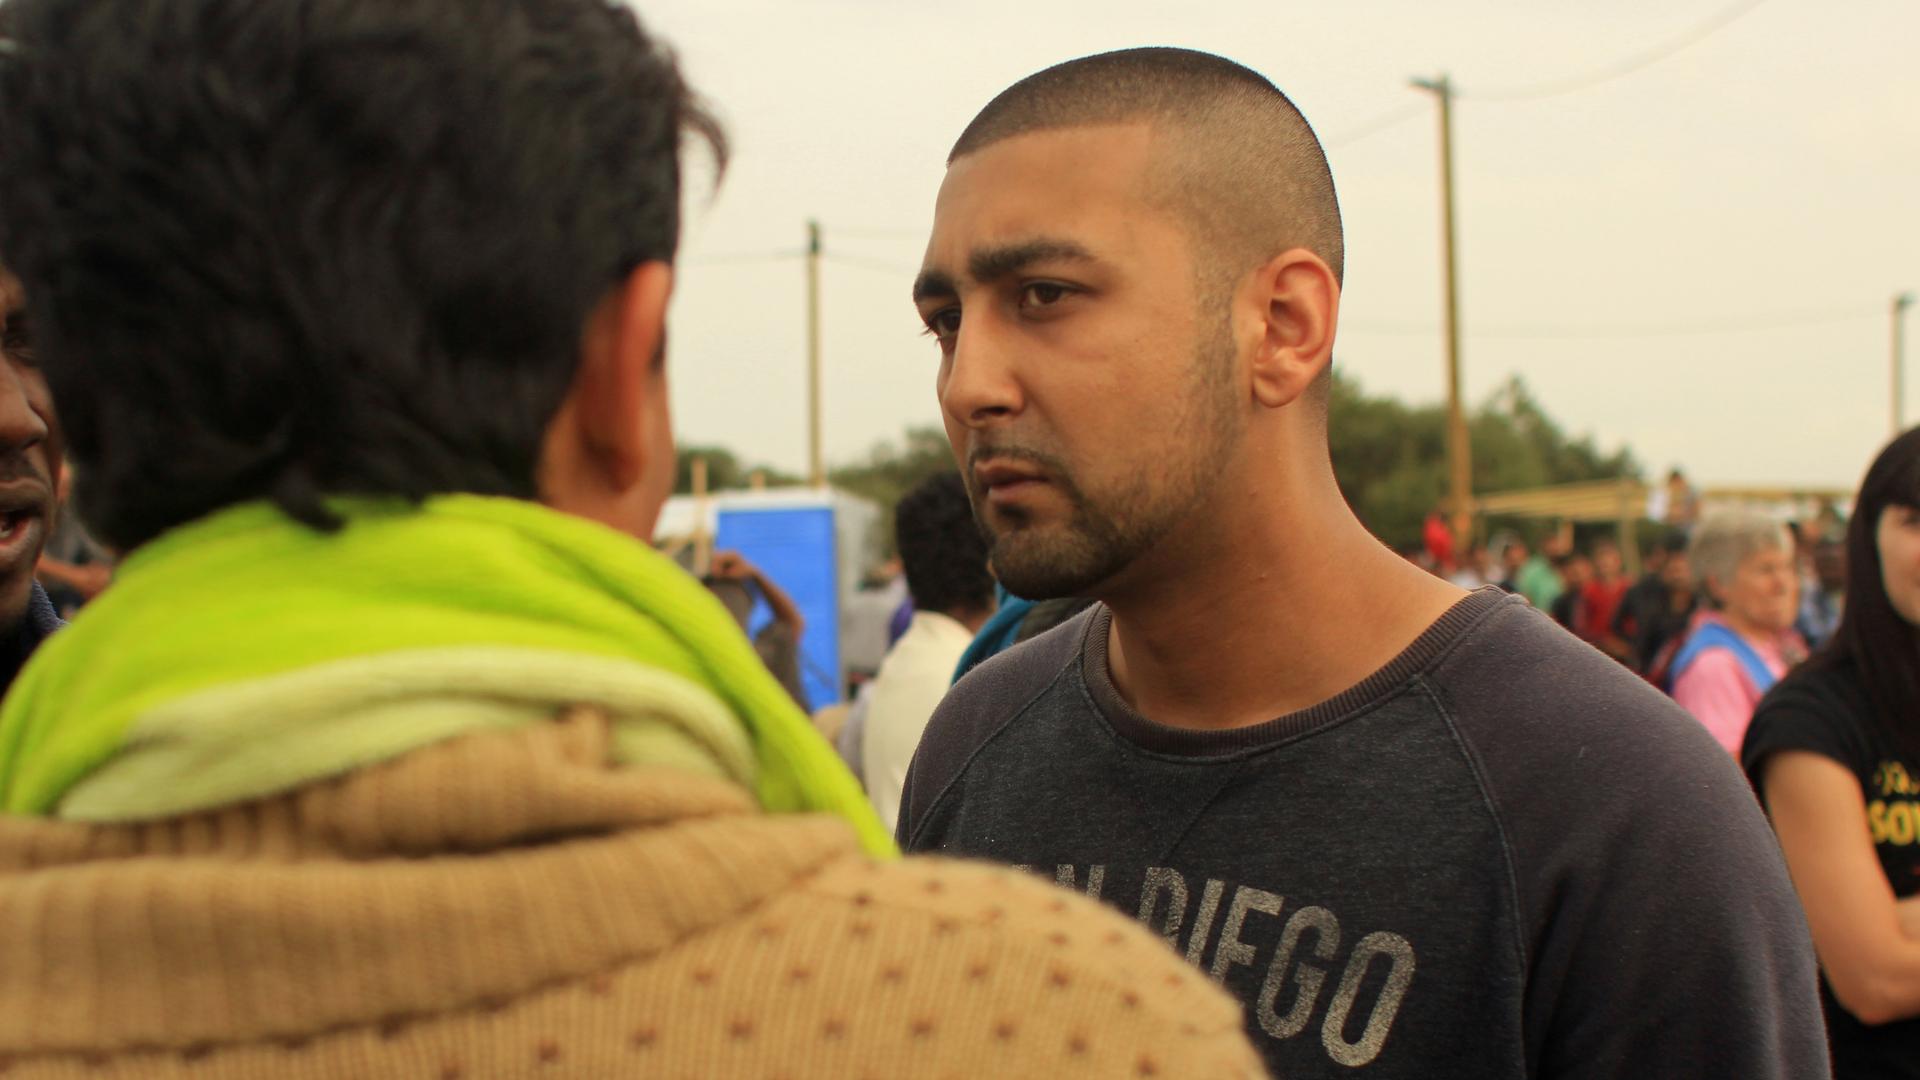 Syed Bokari talks to migrants at the 'Jungle' camp in Calais, France